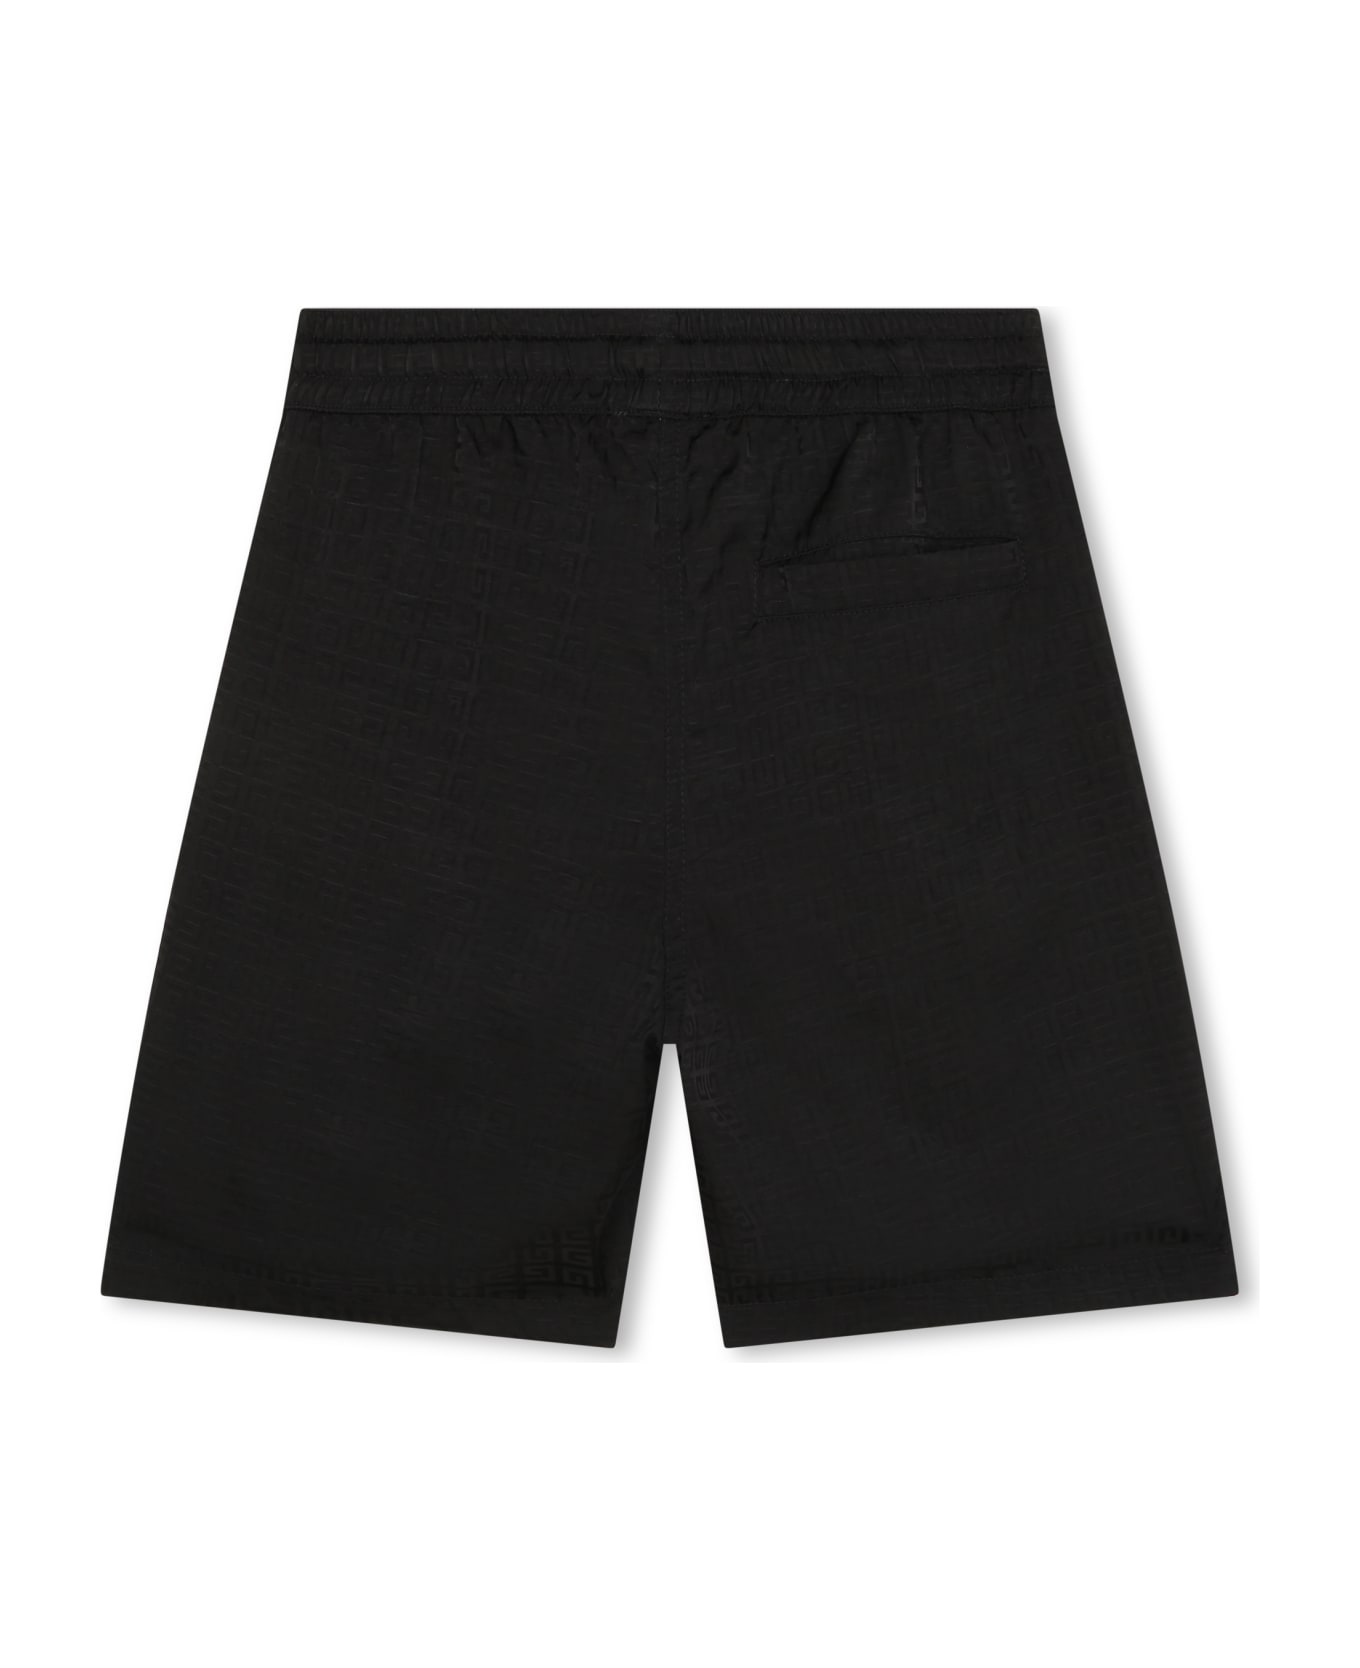 Givenchy Sports Shorts With Monogram - Black ボトムス